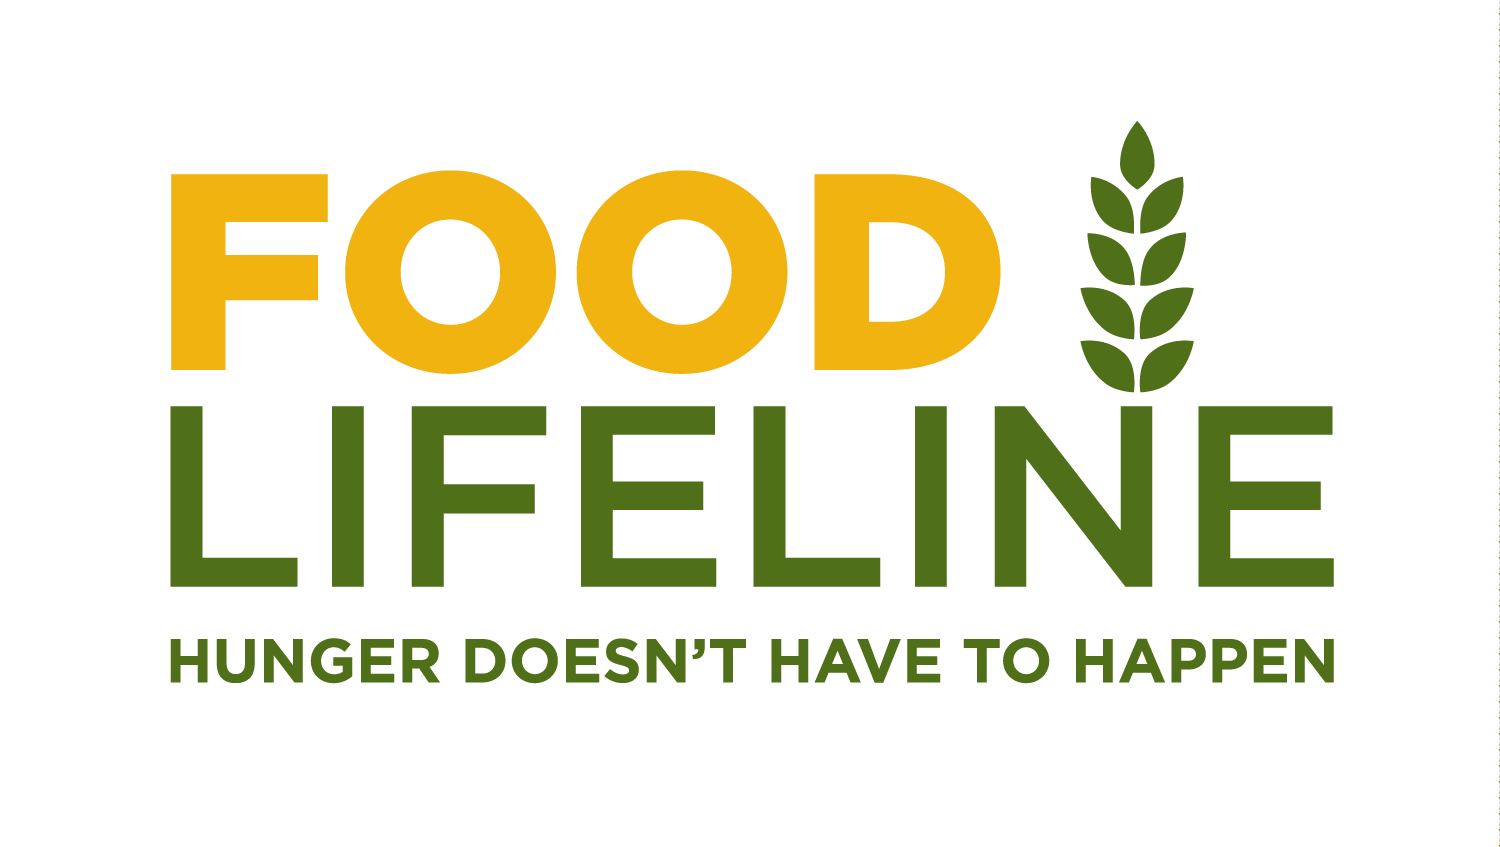 Food.com Logo - Home - Food Lifeline